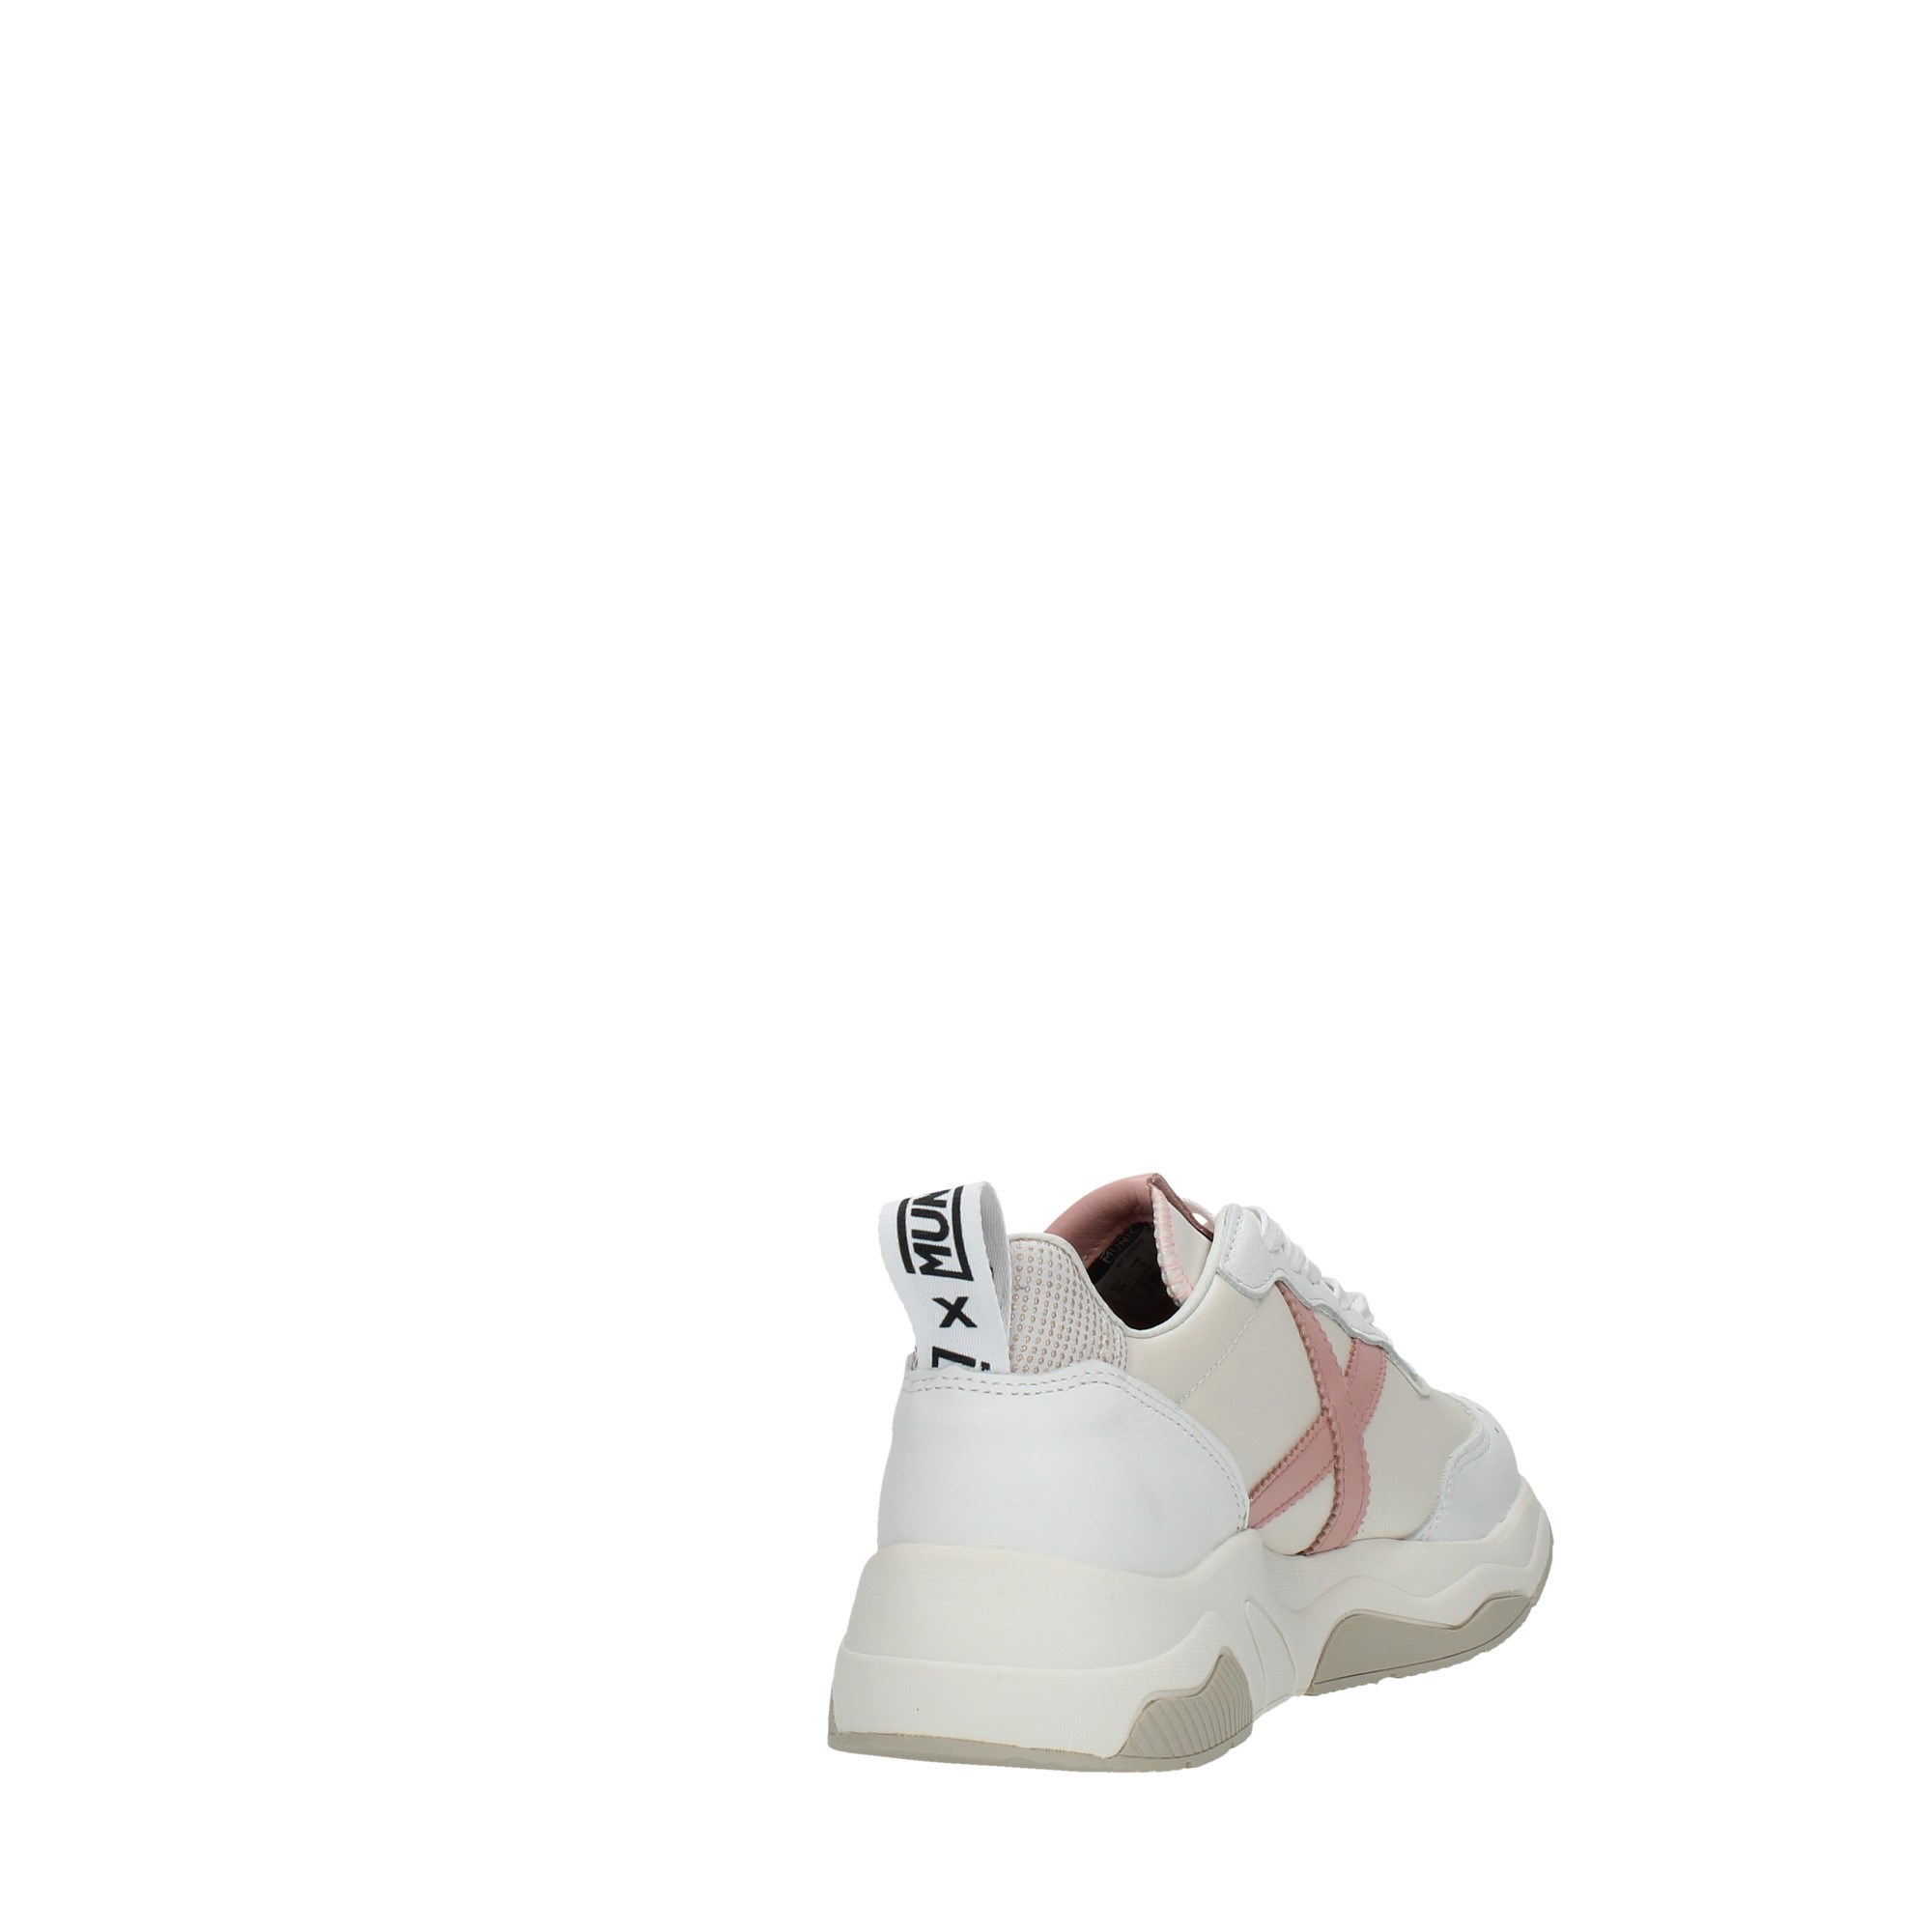 M U N I C H Scarpe Donna Sneakers Bianco WAVE 156